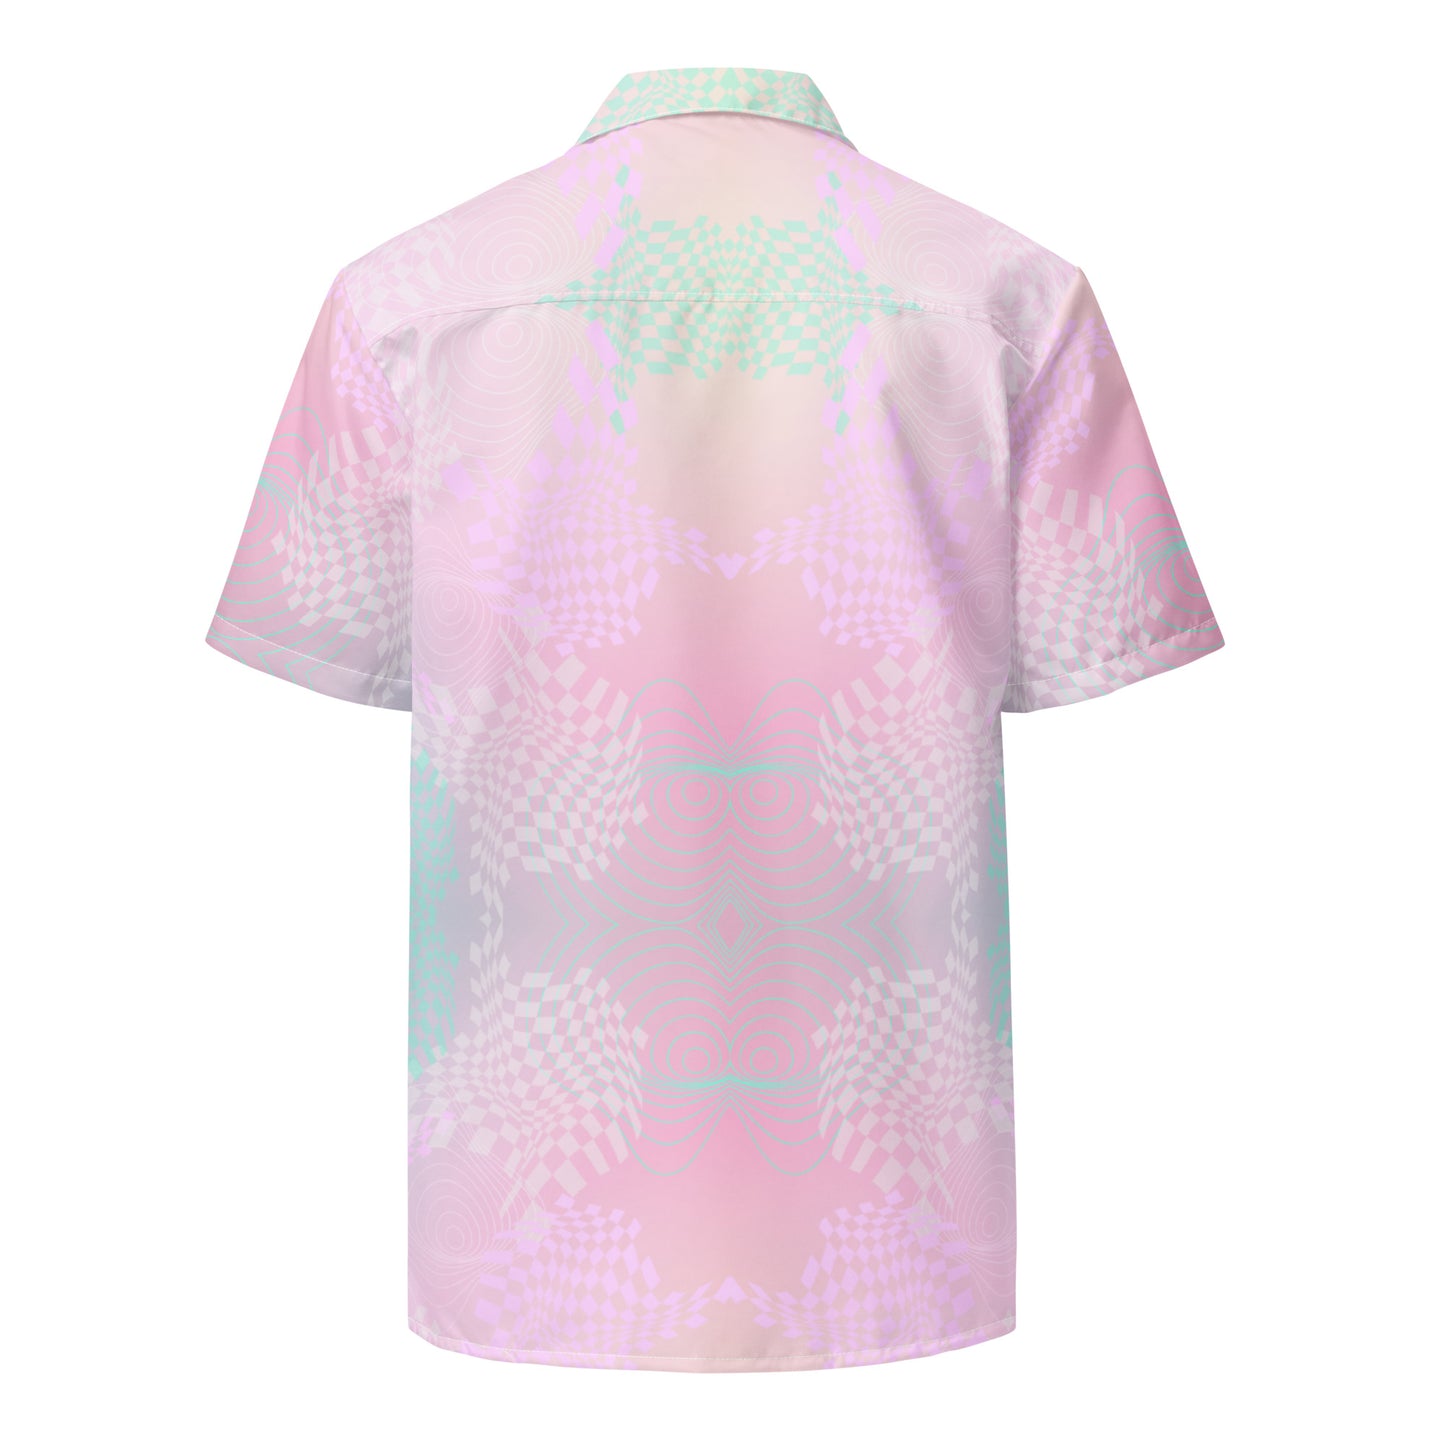 Cotton Candy Men's Hawaiian Shirt